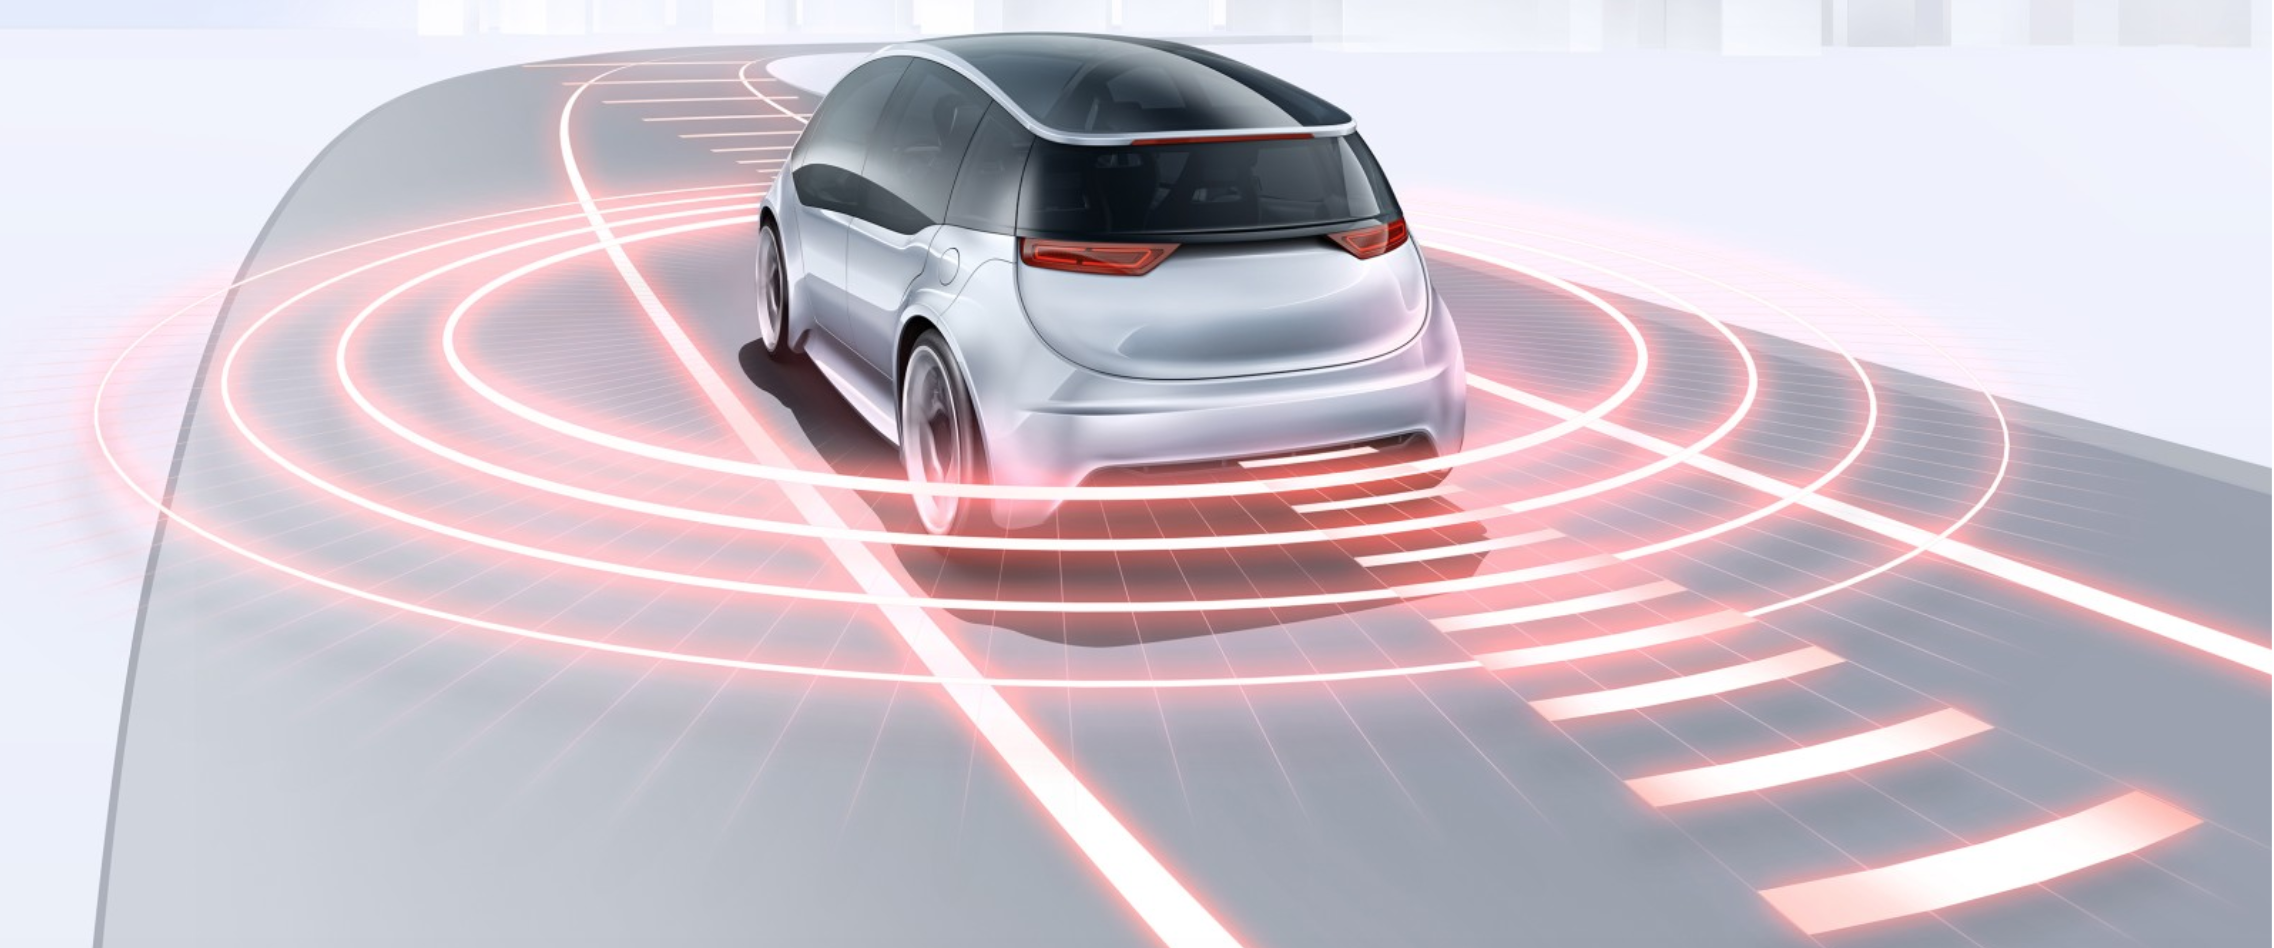 Bosch developing LiDAR sensors for autonomous vehicles